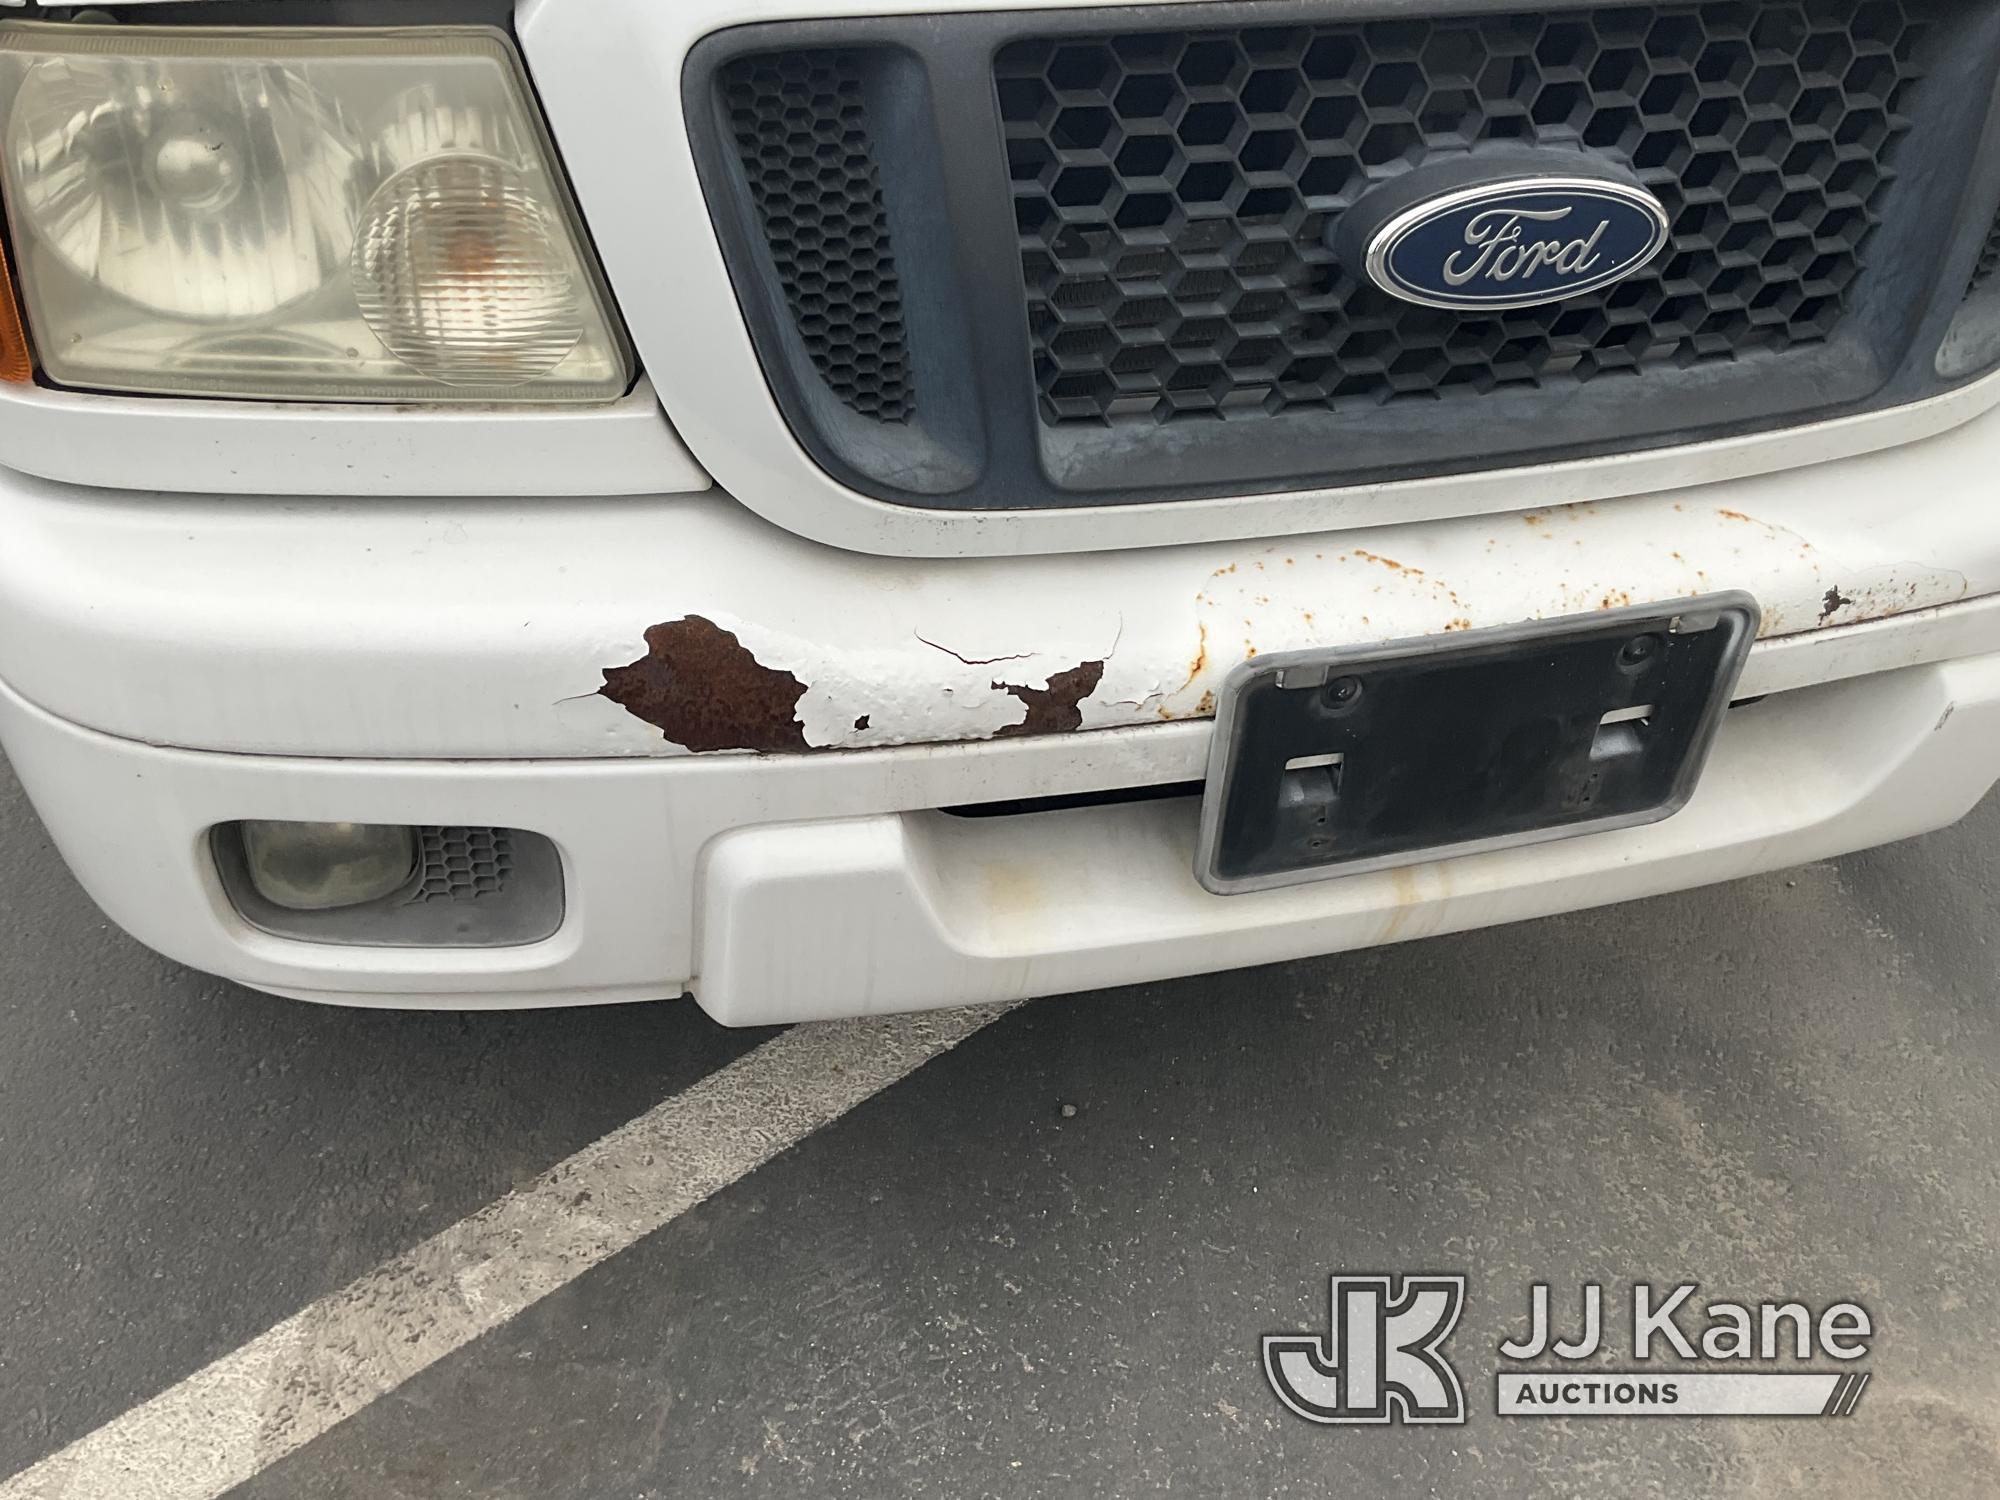 (Jurupa Valley, CA) 2005 Ford Ranger Extended-Cab Pickup Truck Runs Rough & Moves, Rust Damage